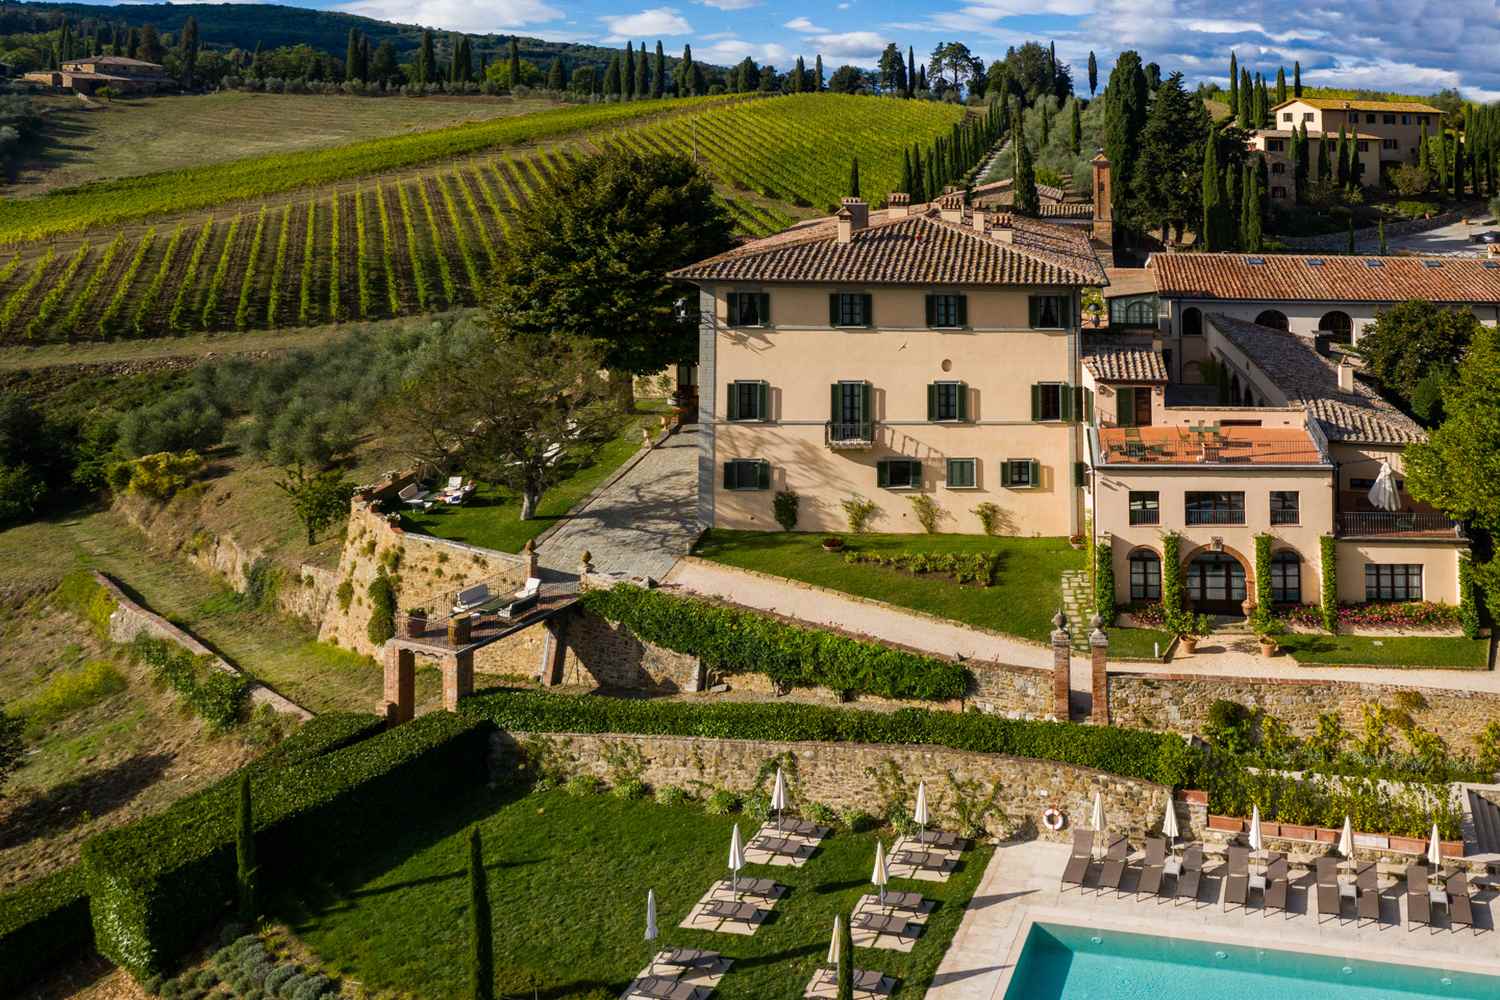 Dievole Wine Resort Chianti, Tuscany - Italy